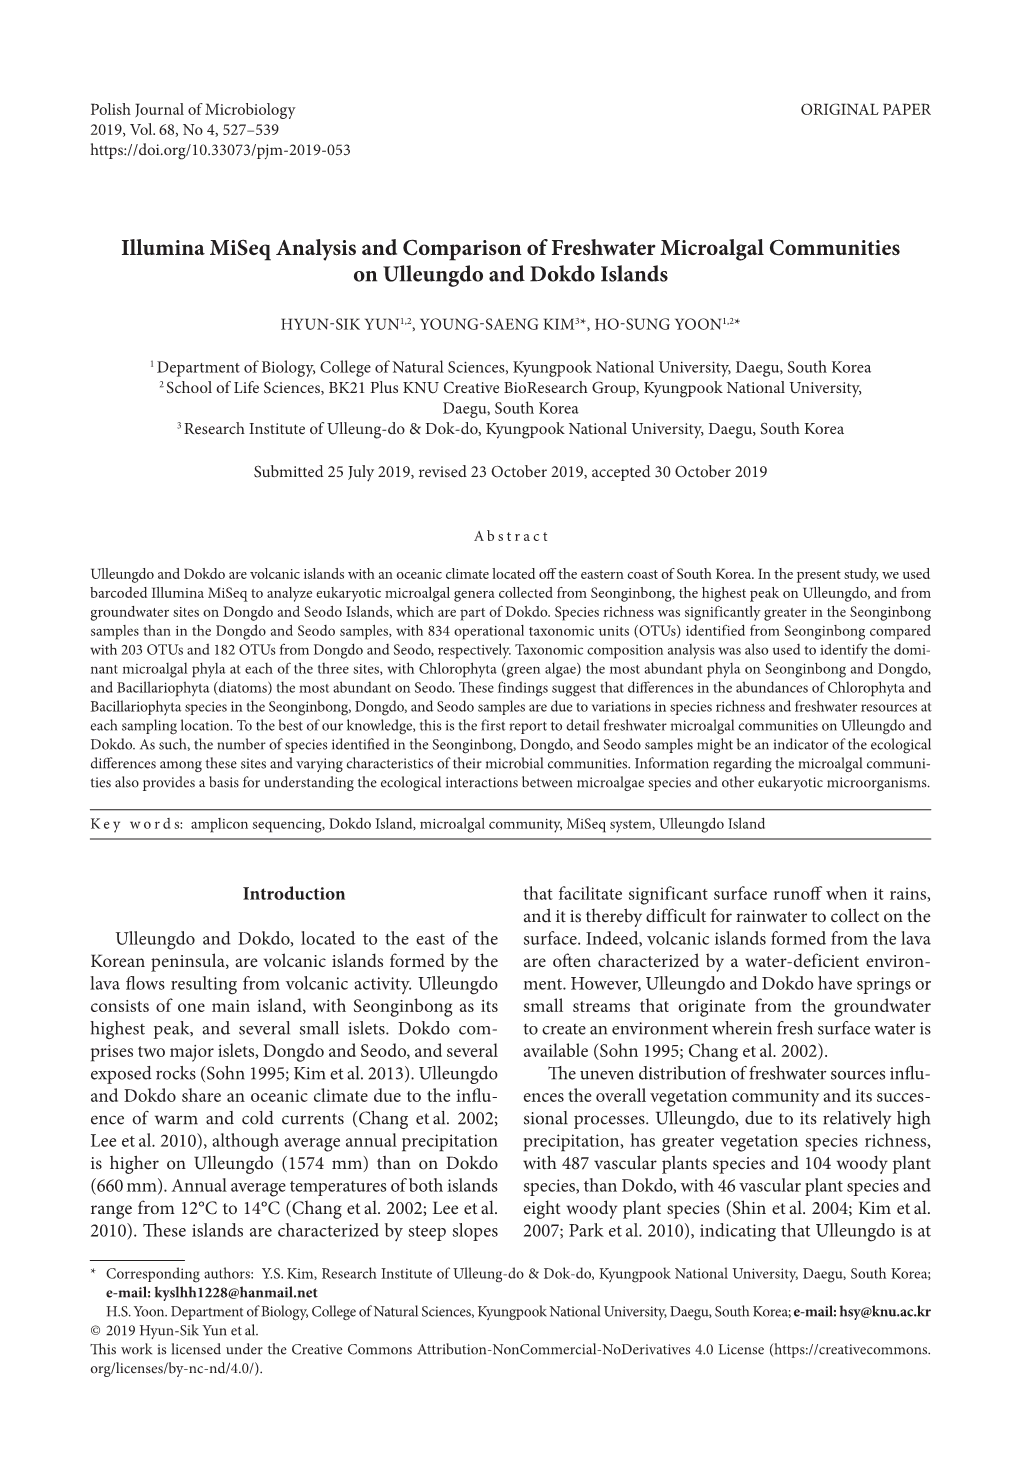 Illumina Miseq Analysis and Comparison of Freshwater Microalgal Communities on Ulleungdo and Dokdo Islands